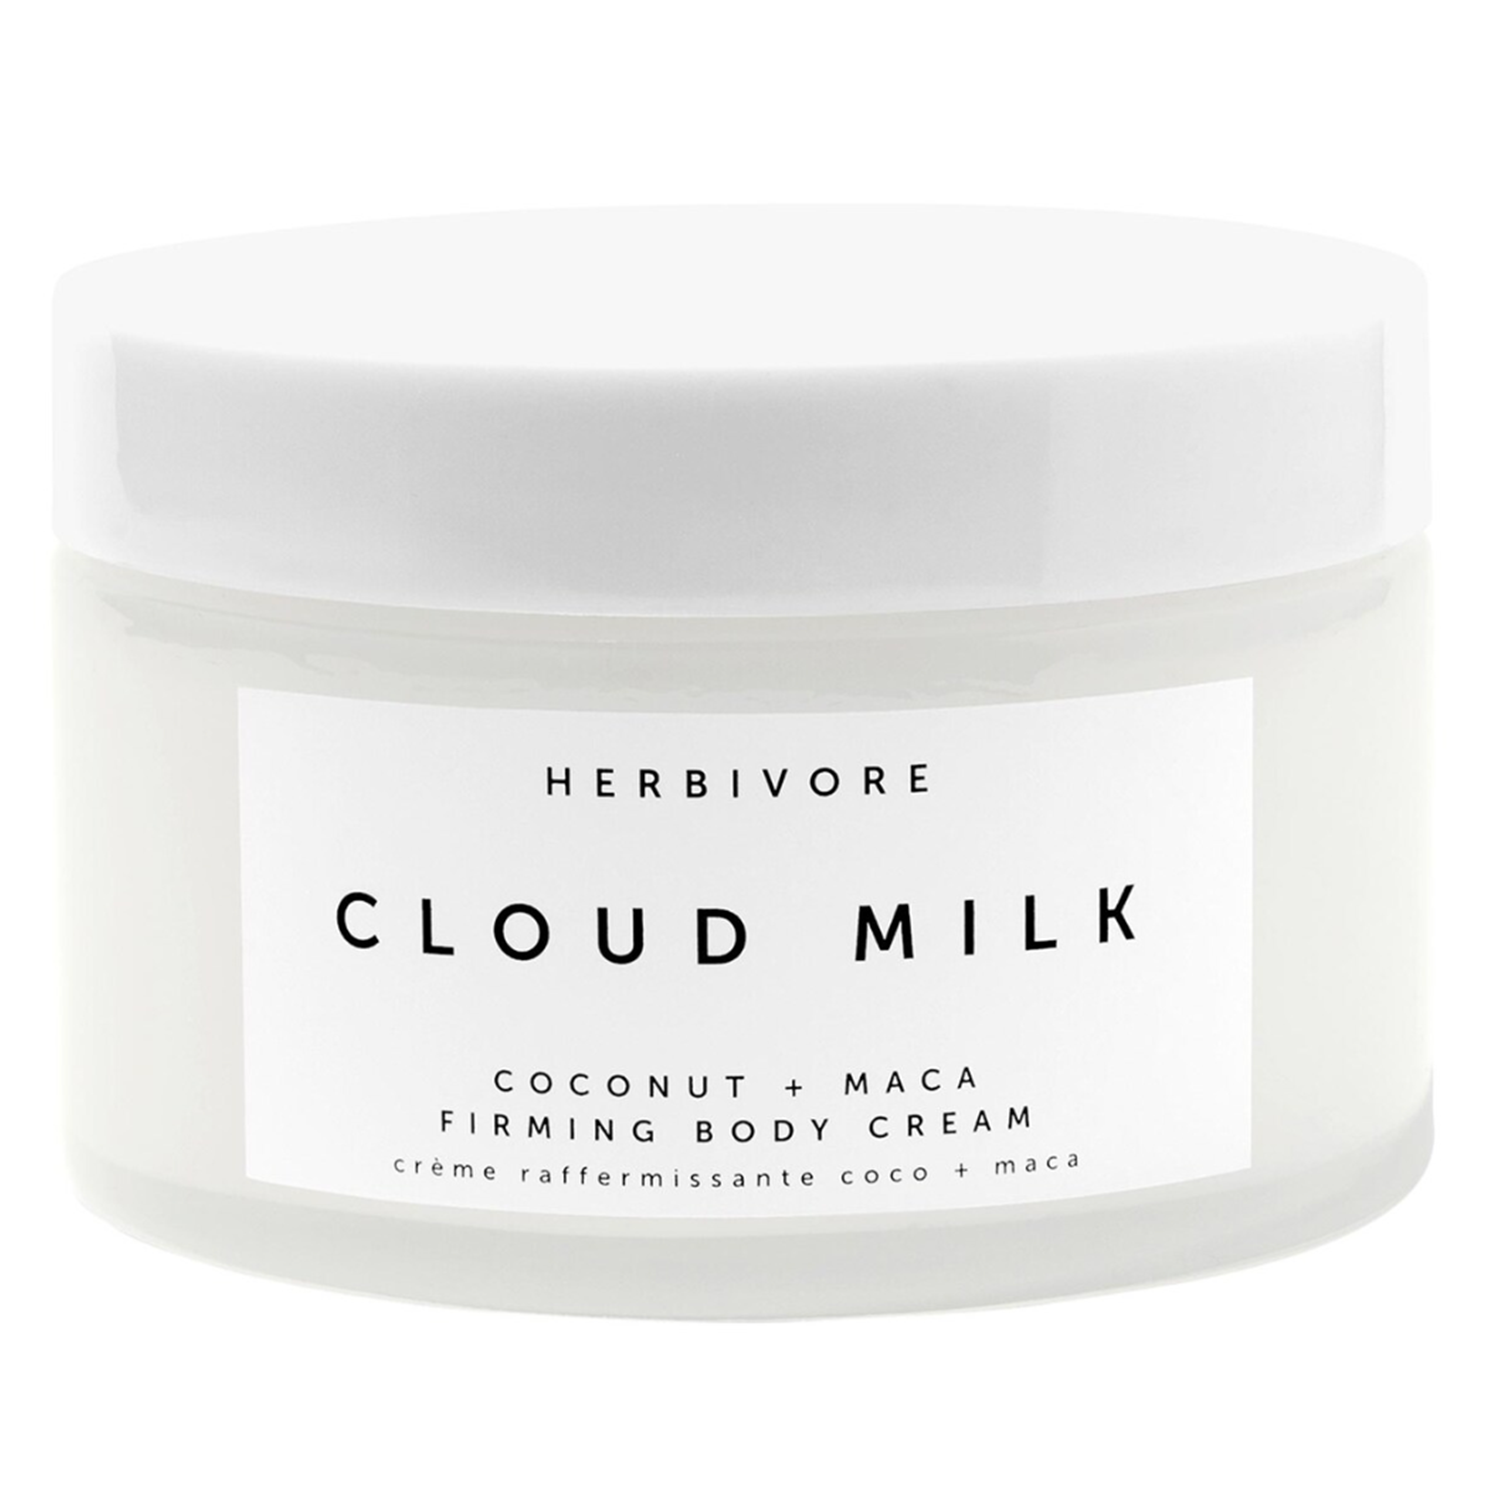 Herbivore Cloud Milk Coconut + Maca Firming Body Cream, 6.7 oz / 200 mL